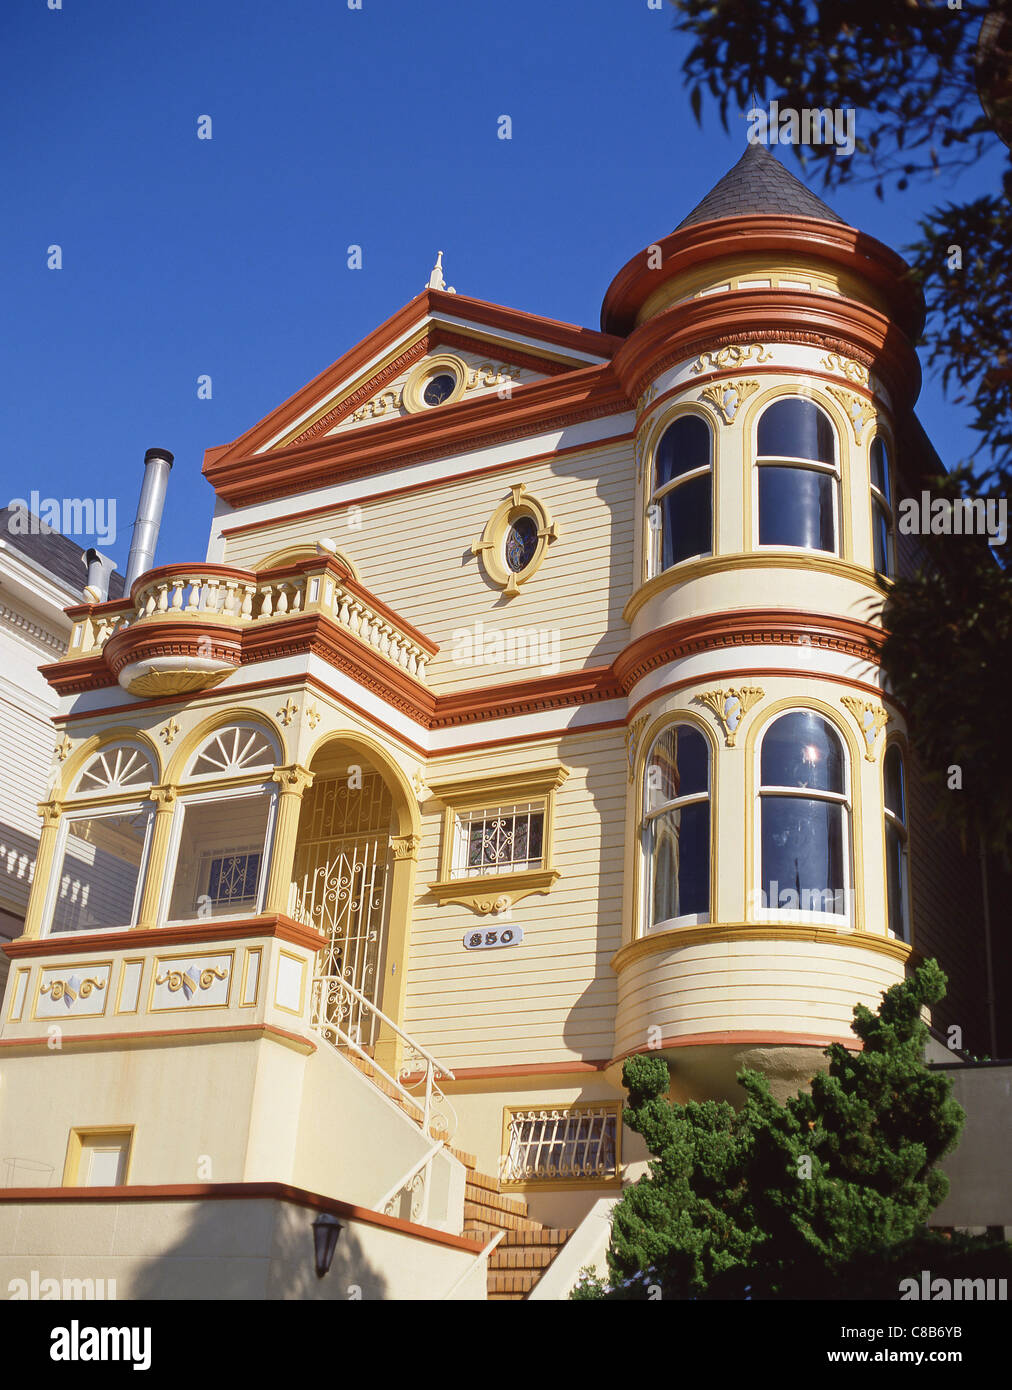 Victorian house on Steiner street, Alamo Square, San Francisco, California, United States of America Stock Photo